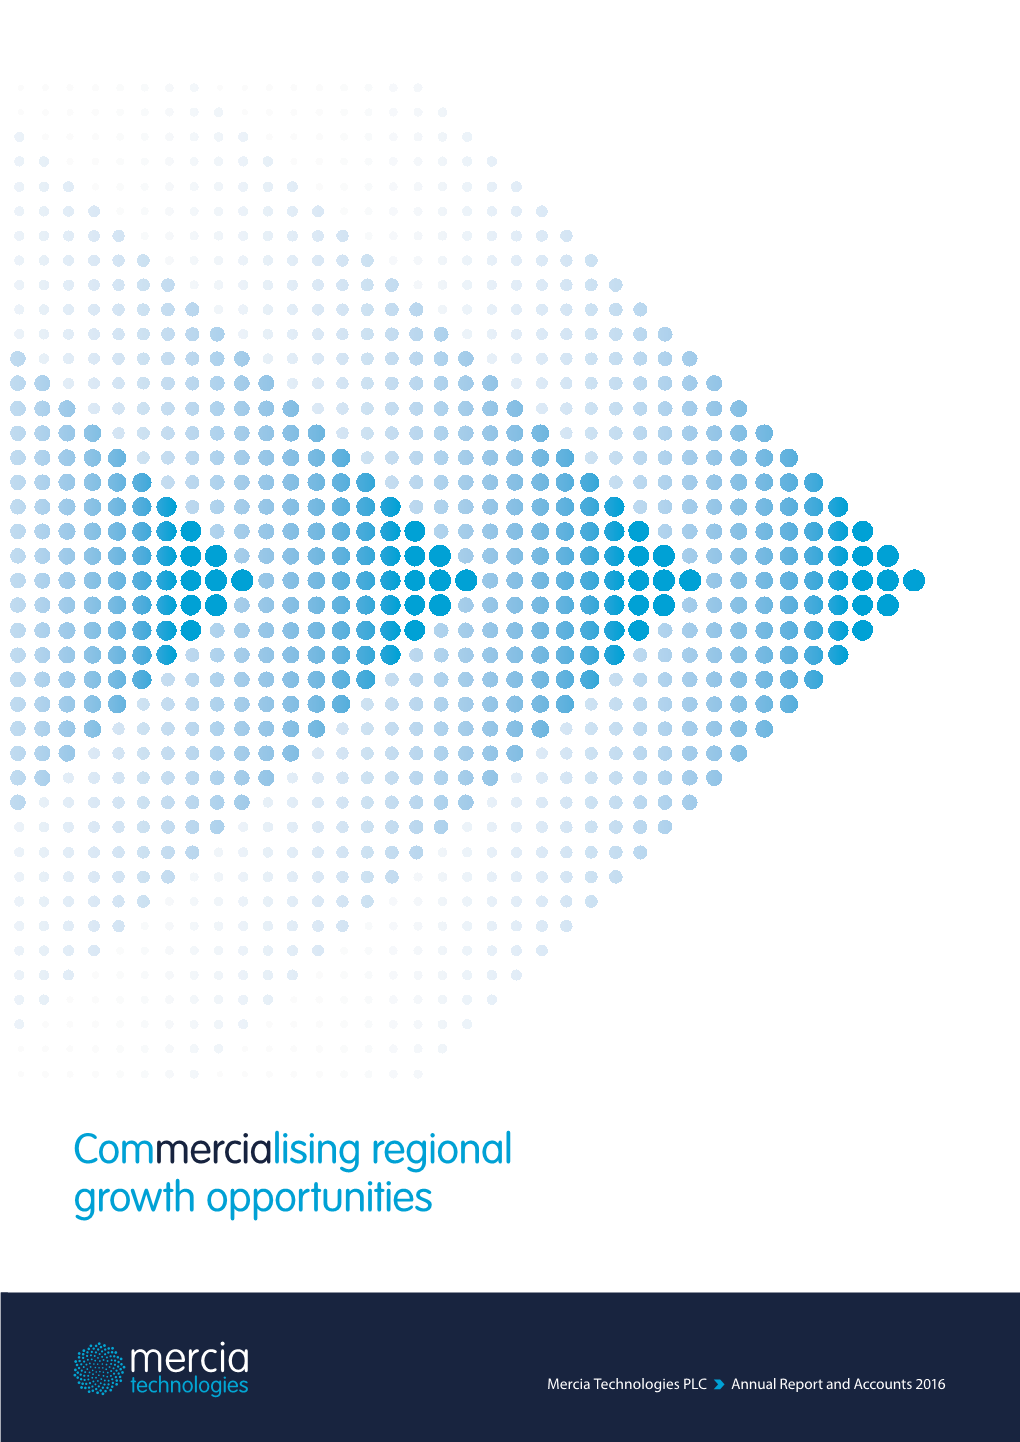 Mercia Commercialising Regional Growth Opportunities